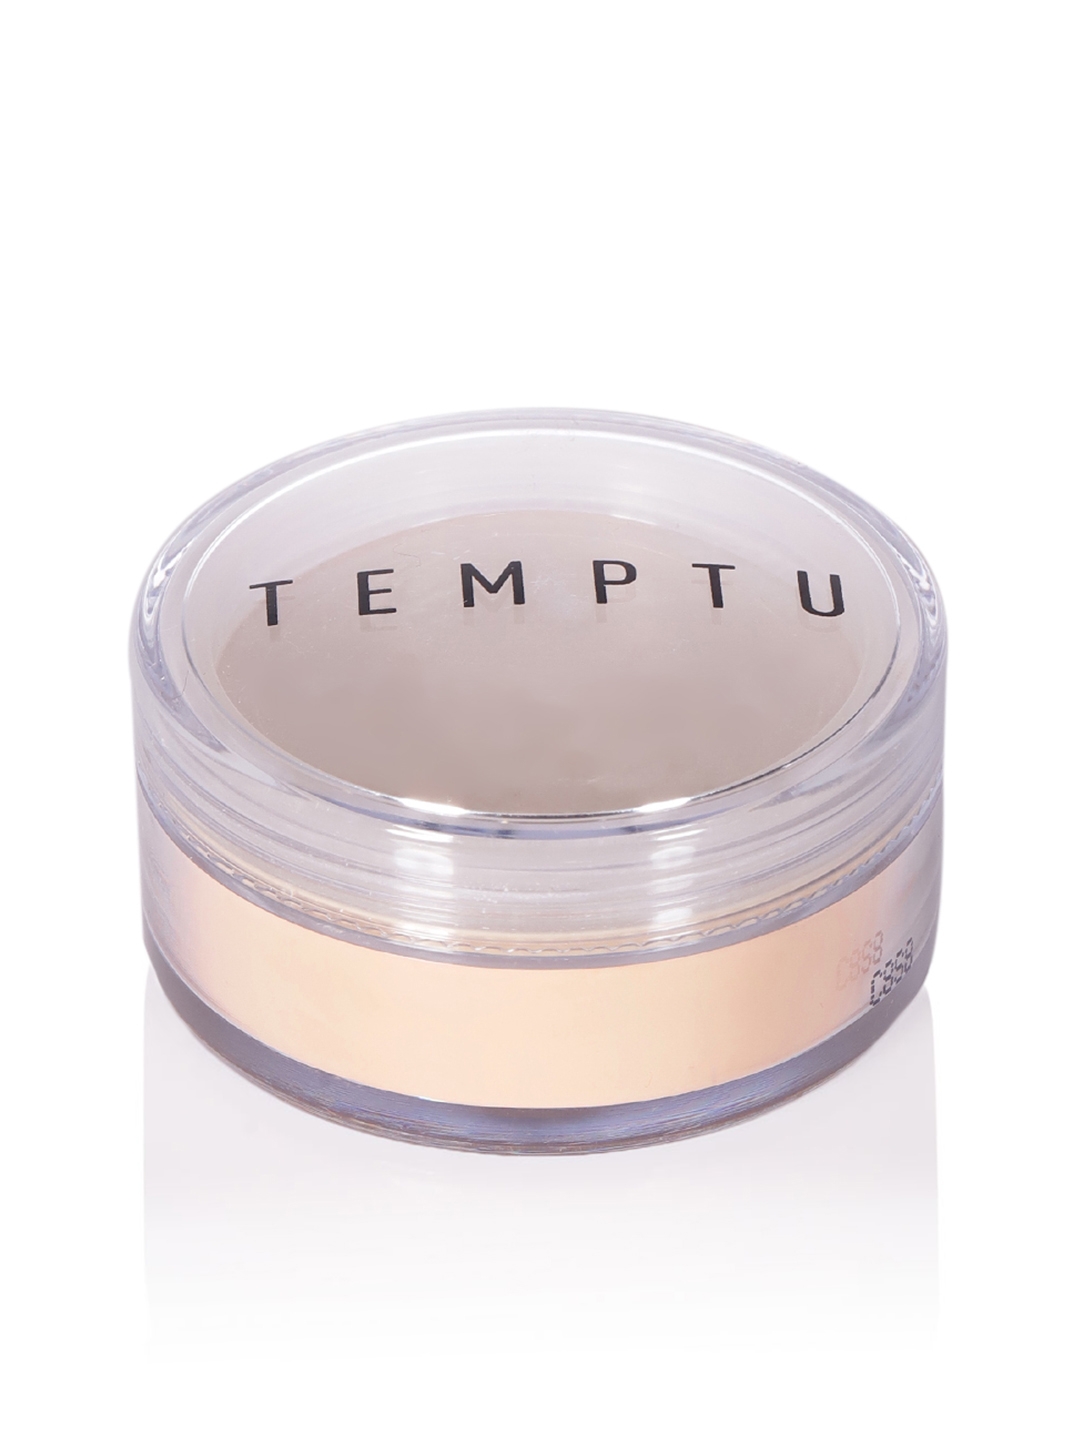 TEMPTU Pro Silicon Based Dark No. 3 S/B Invisible Difference Finishing Powder